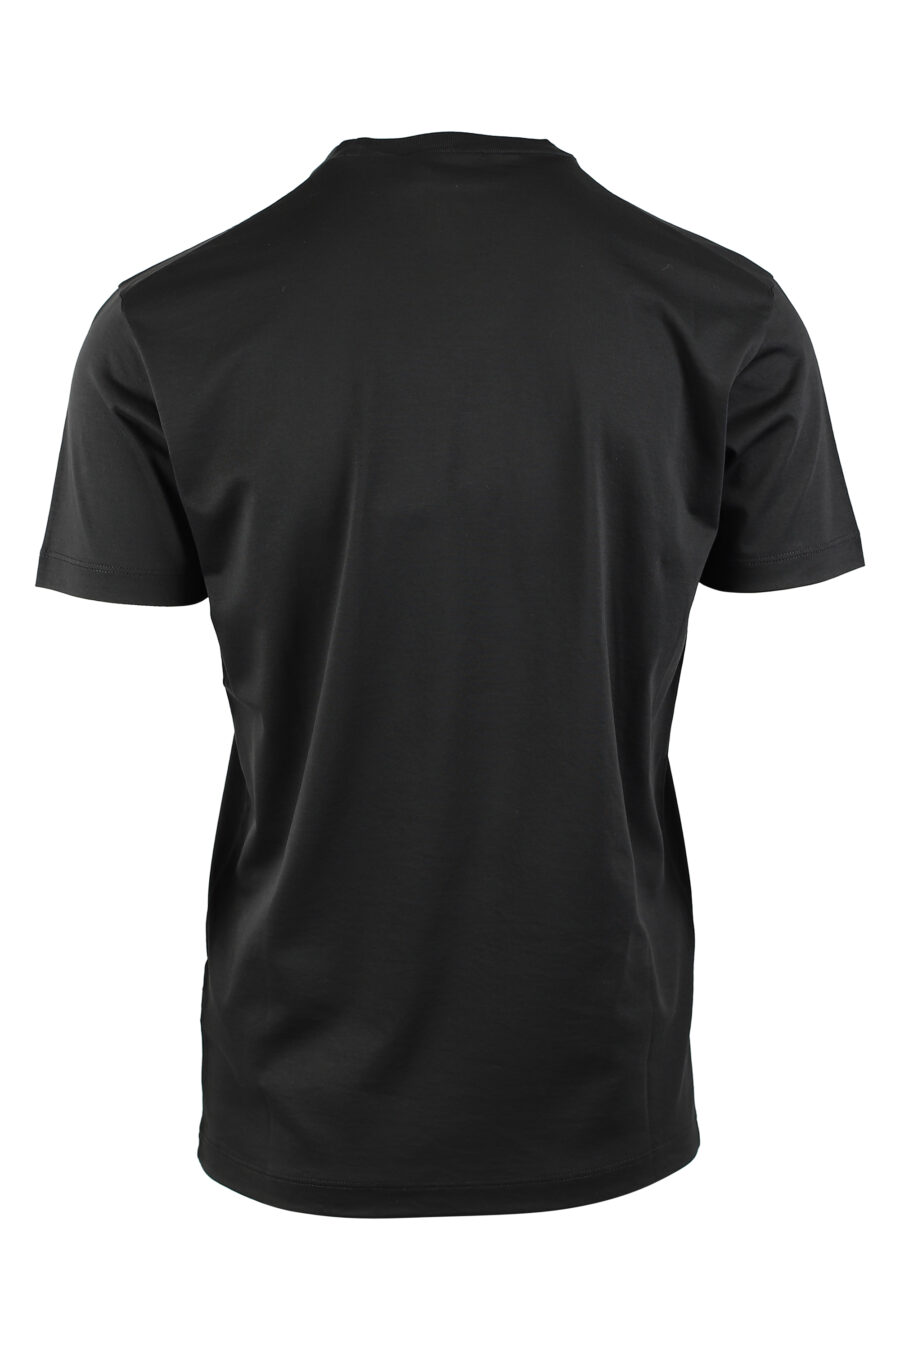 Camiseta negra con maxilogo en silueta en onda - IMG 0561